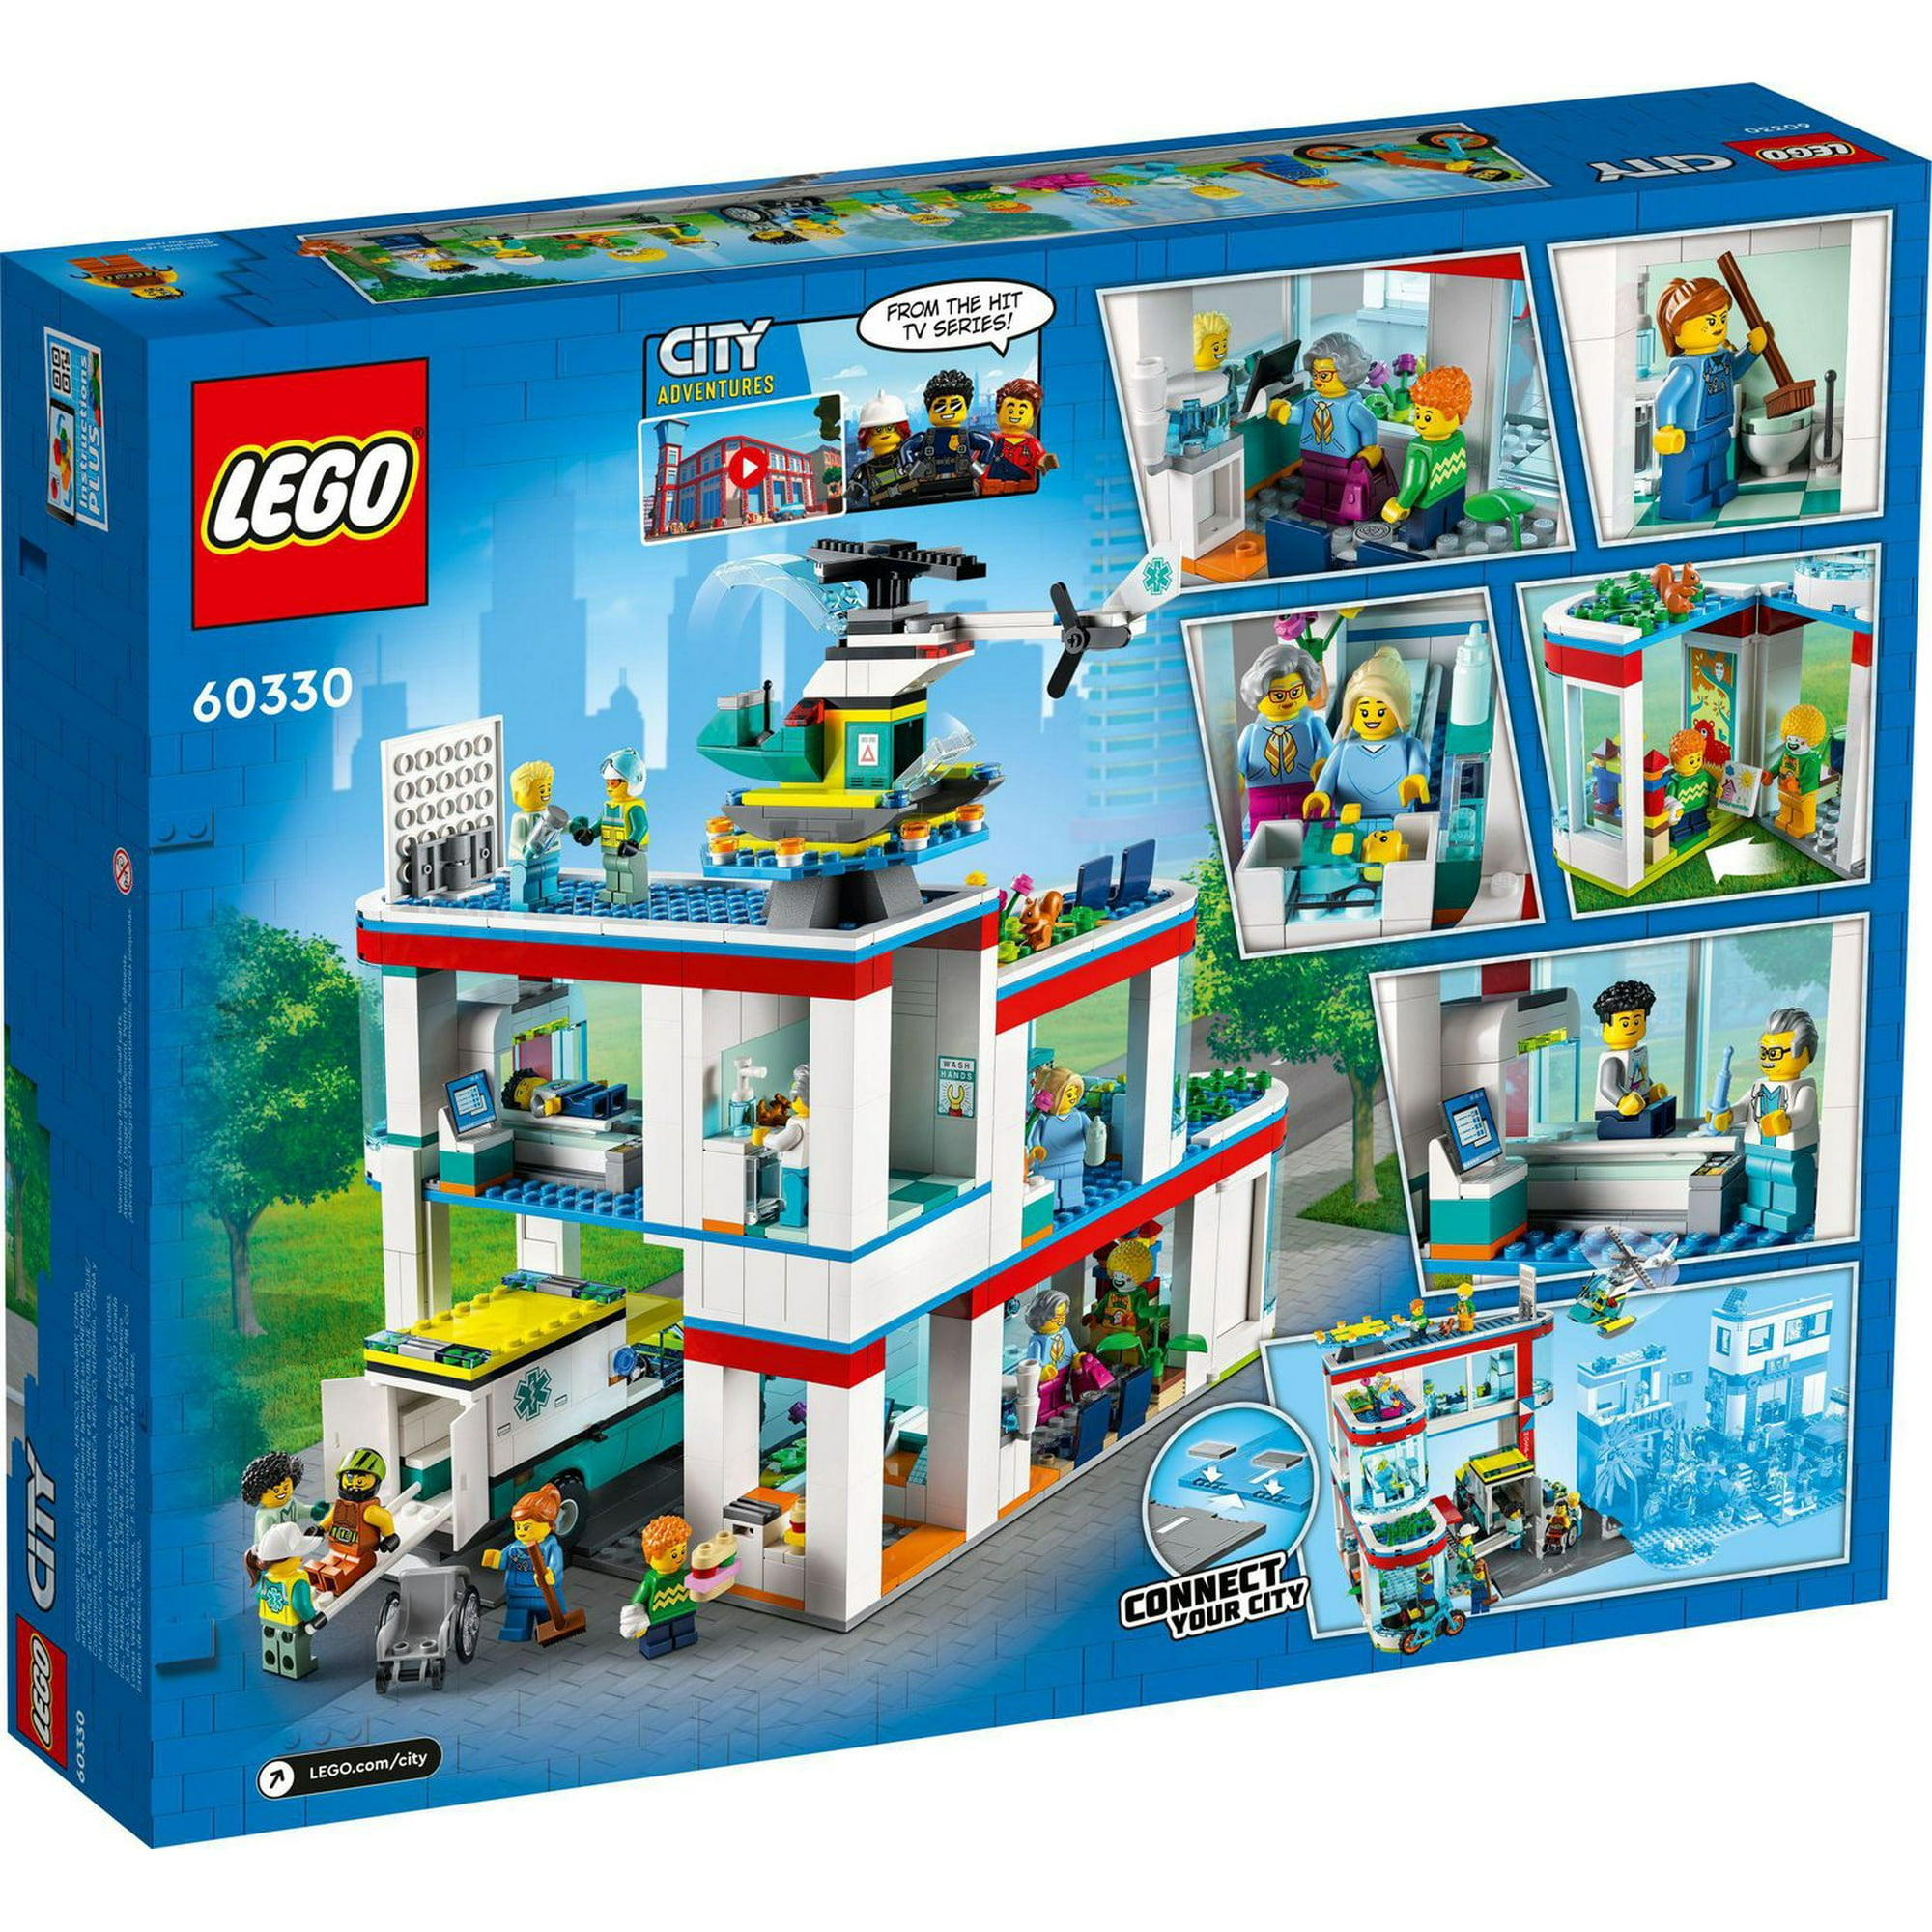 LEGO City Hospital 60330 Toy Building Kit (816 Pieces) 